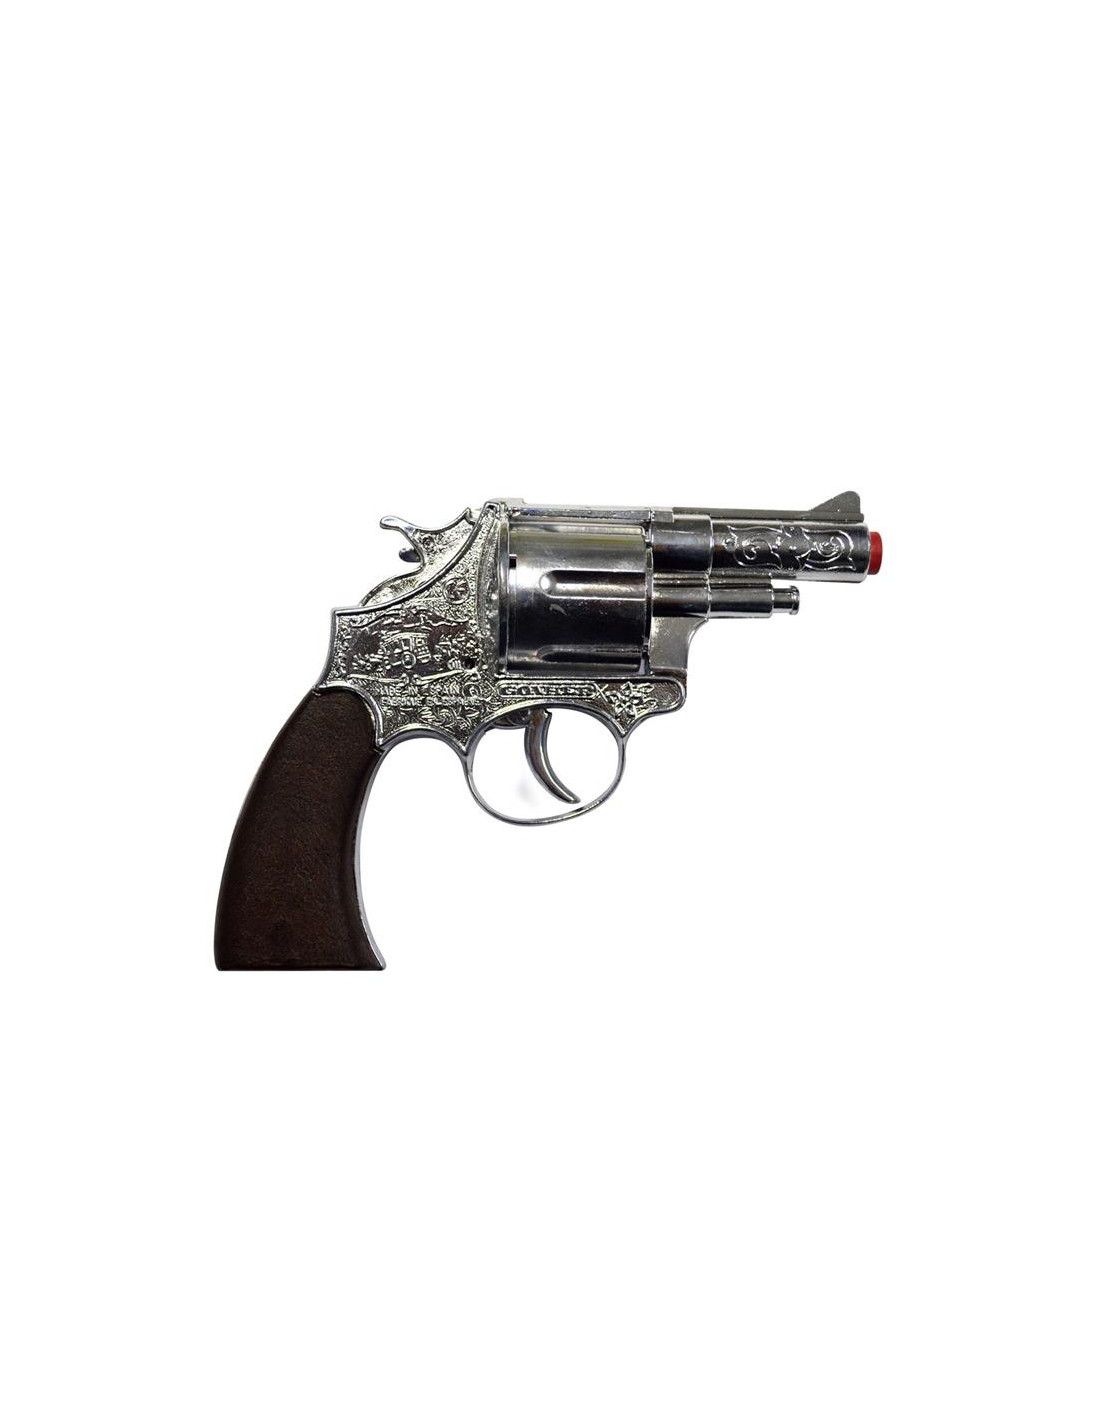 Pistolet Police en Métal Revolver Jouet Avec 12 Coups Cup Gun